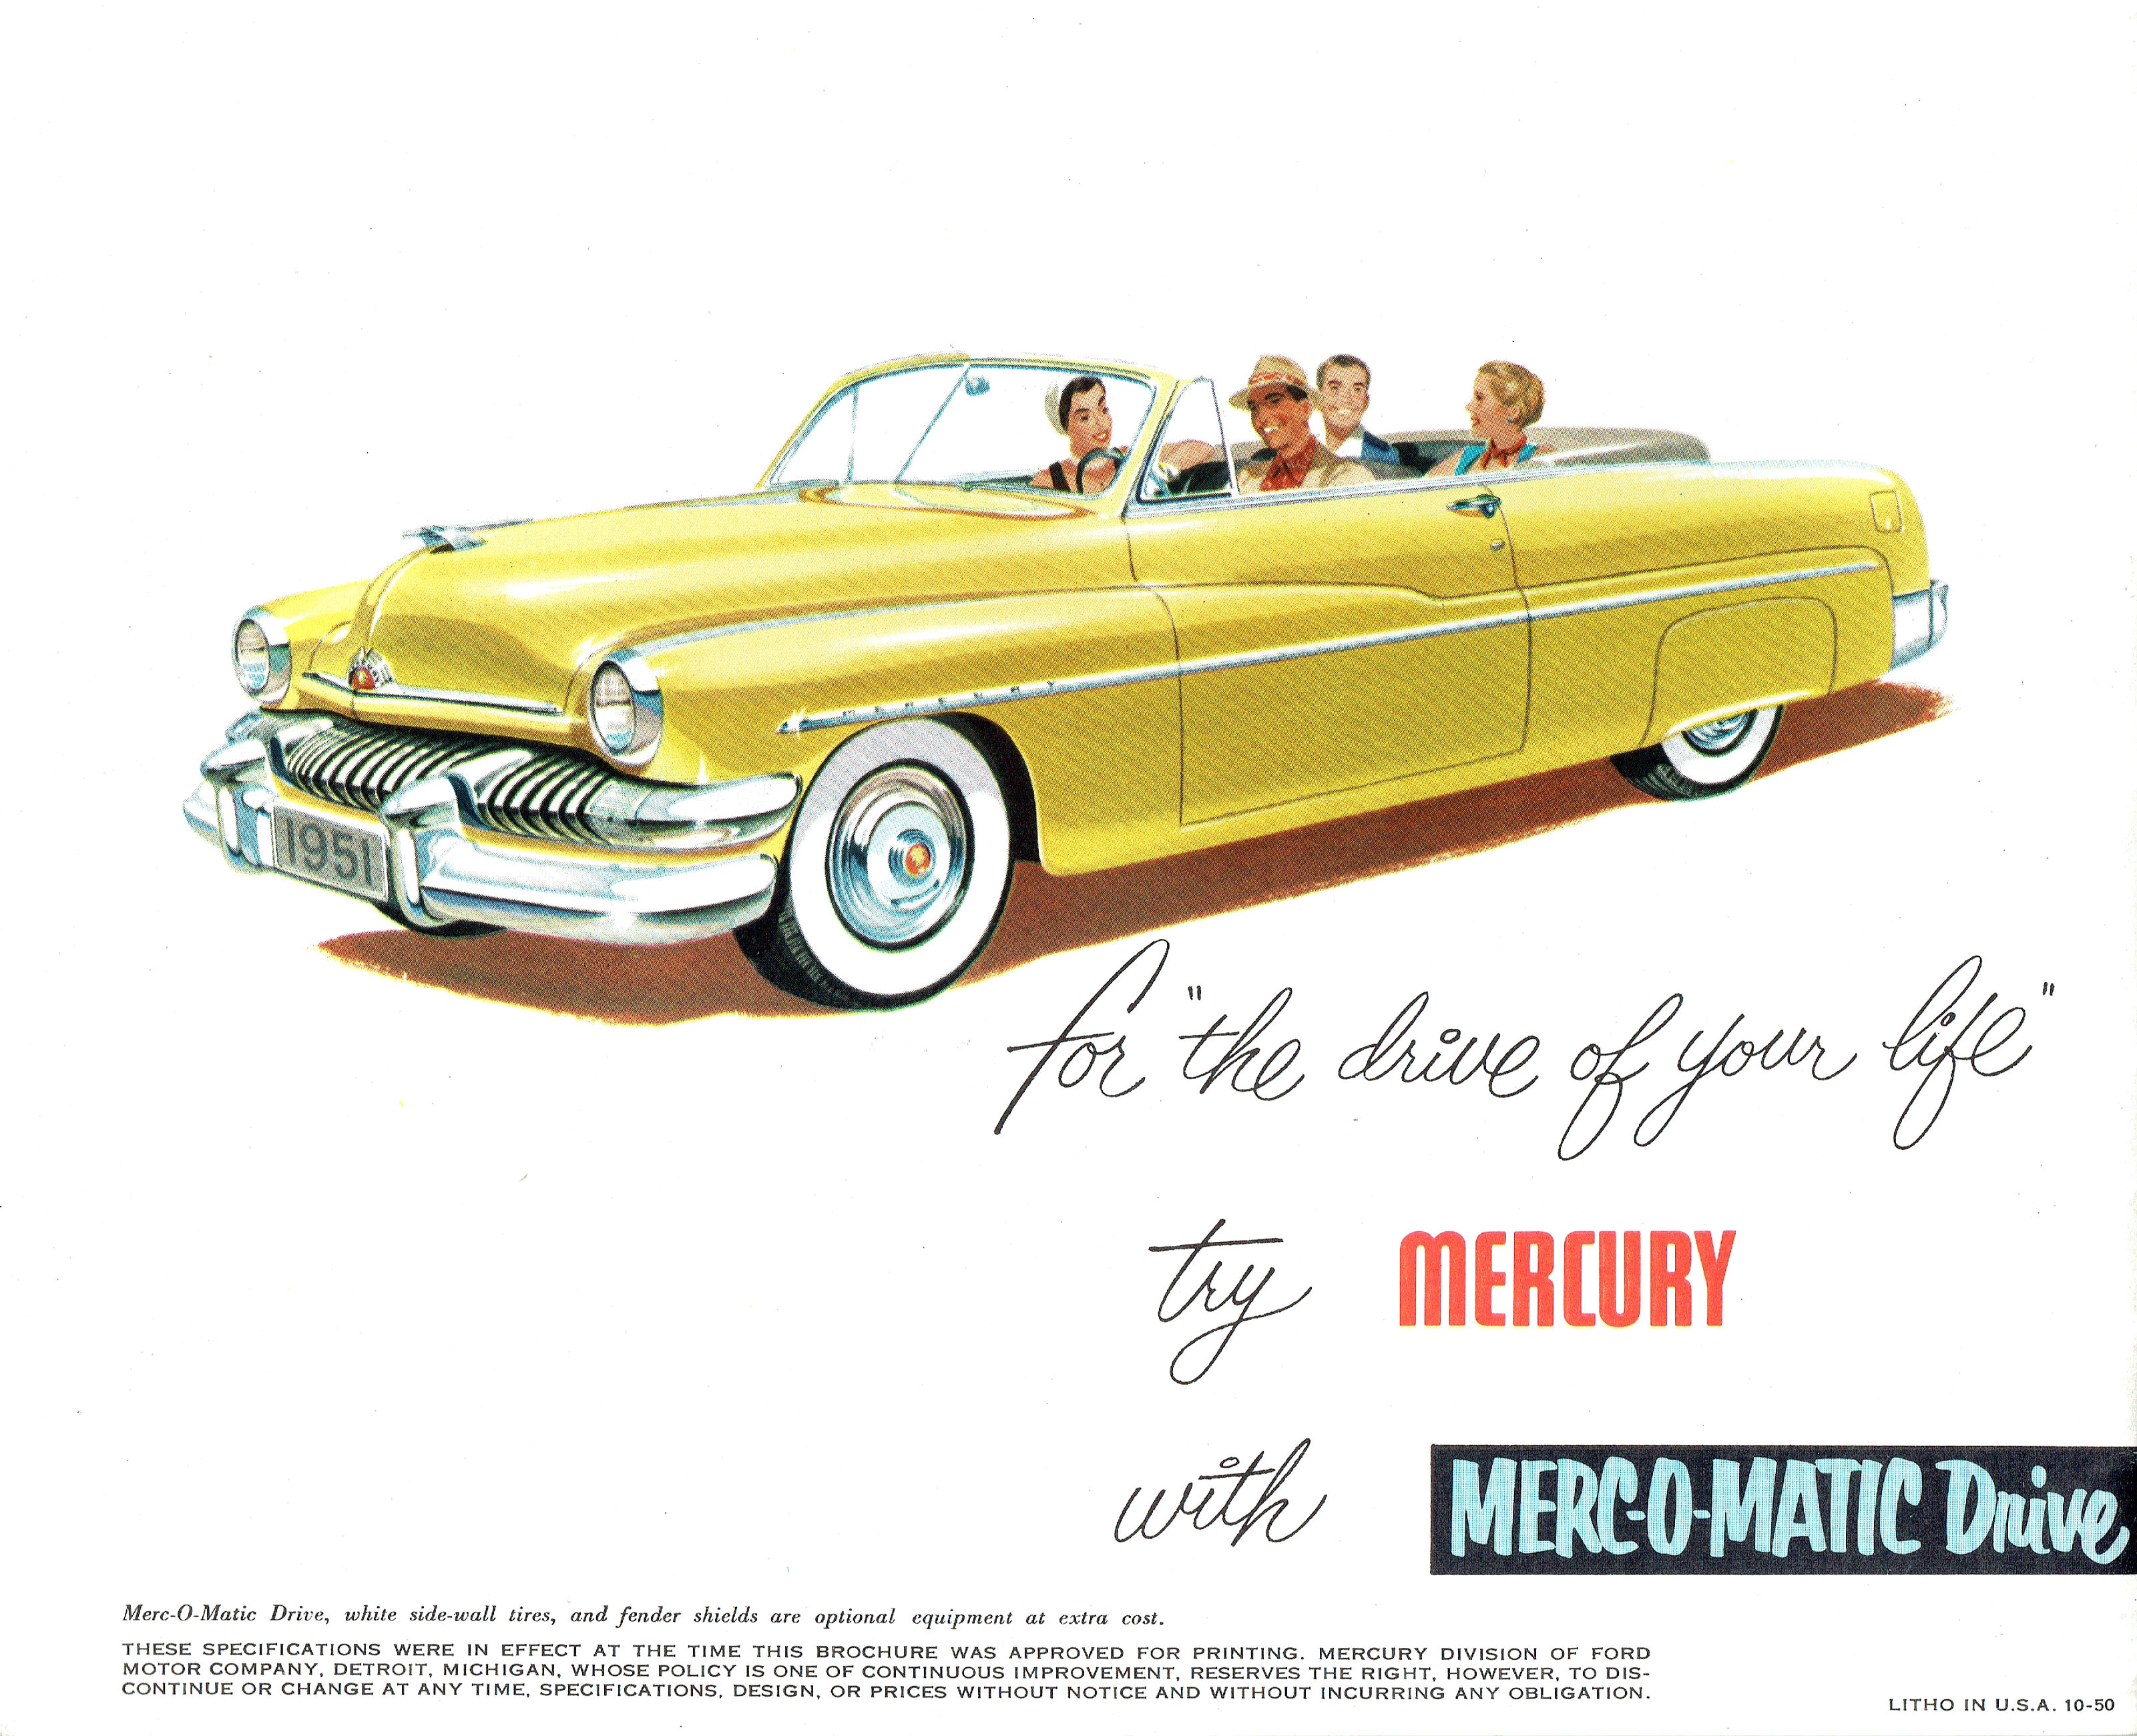 1951 Mercury Merc-O-Matic Drive-16